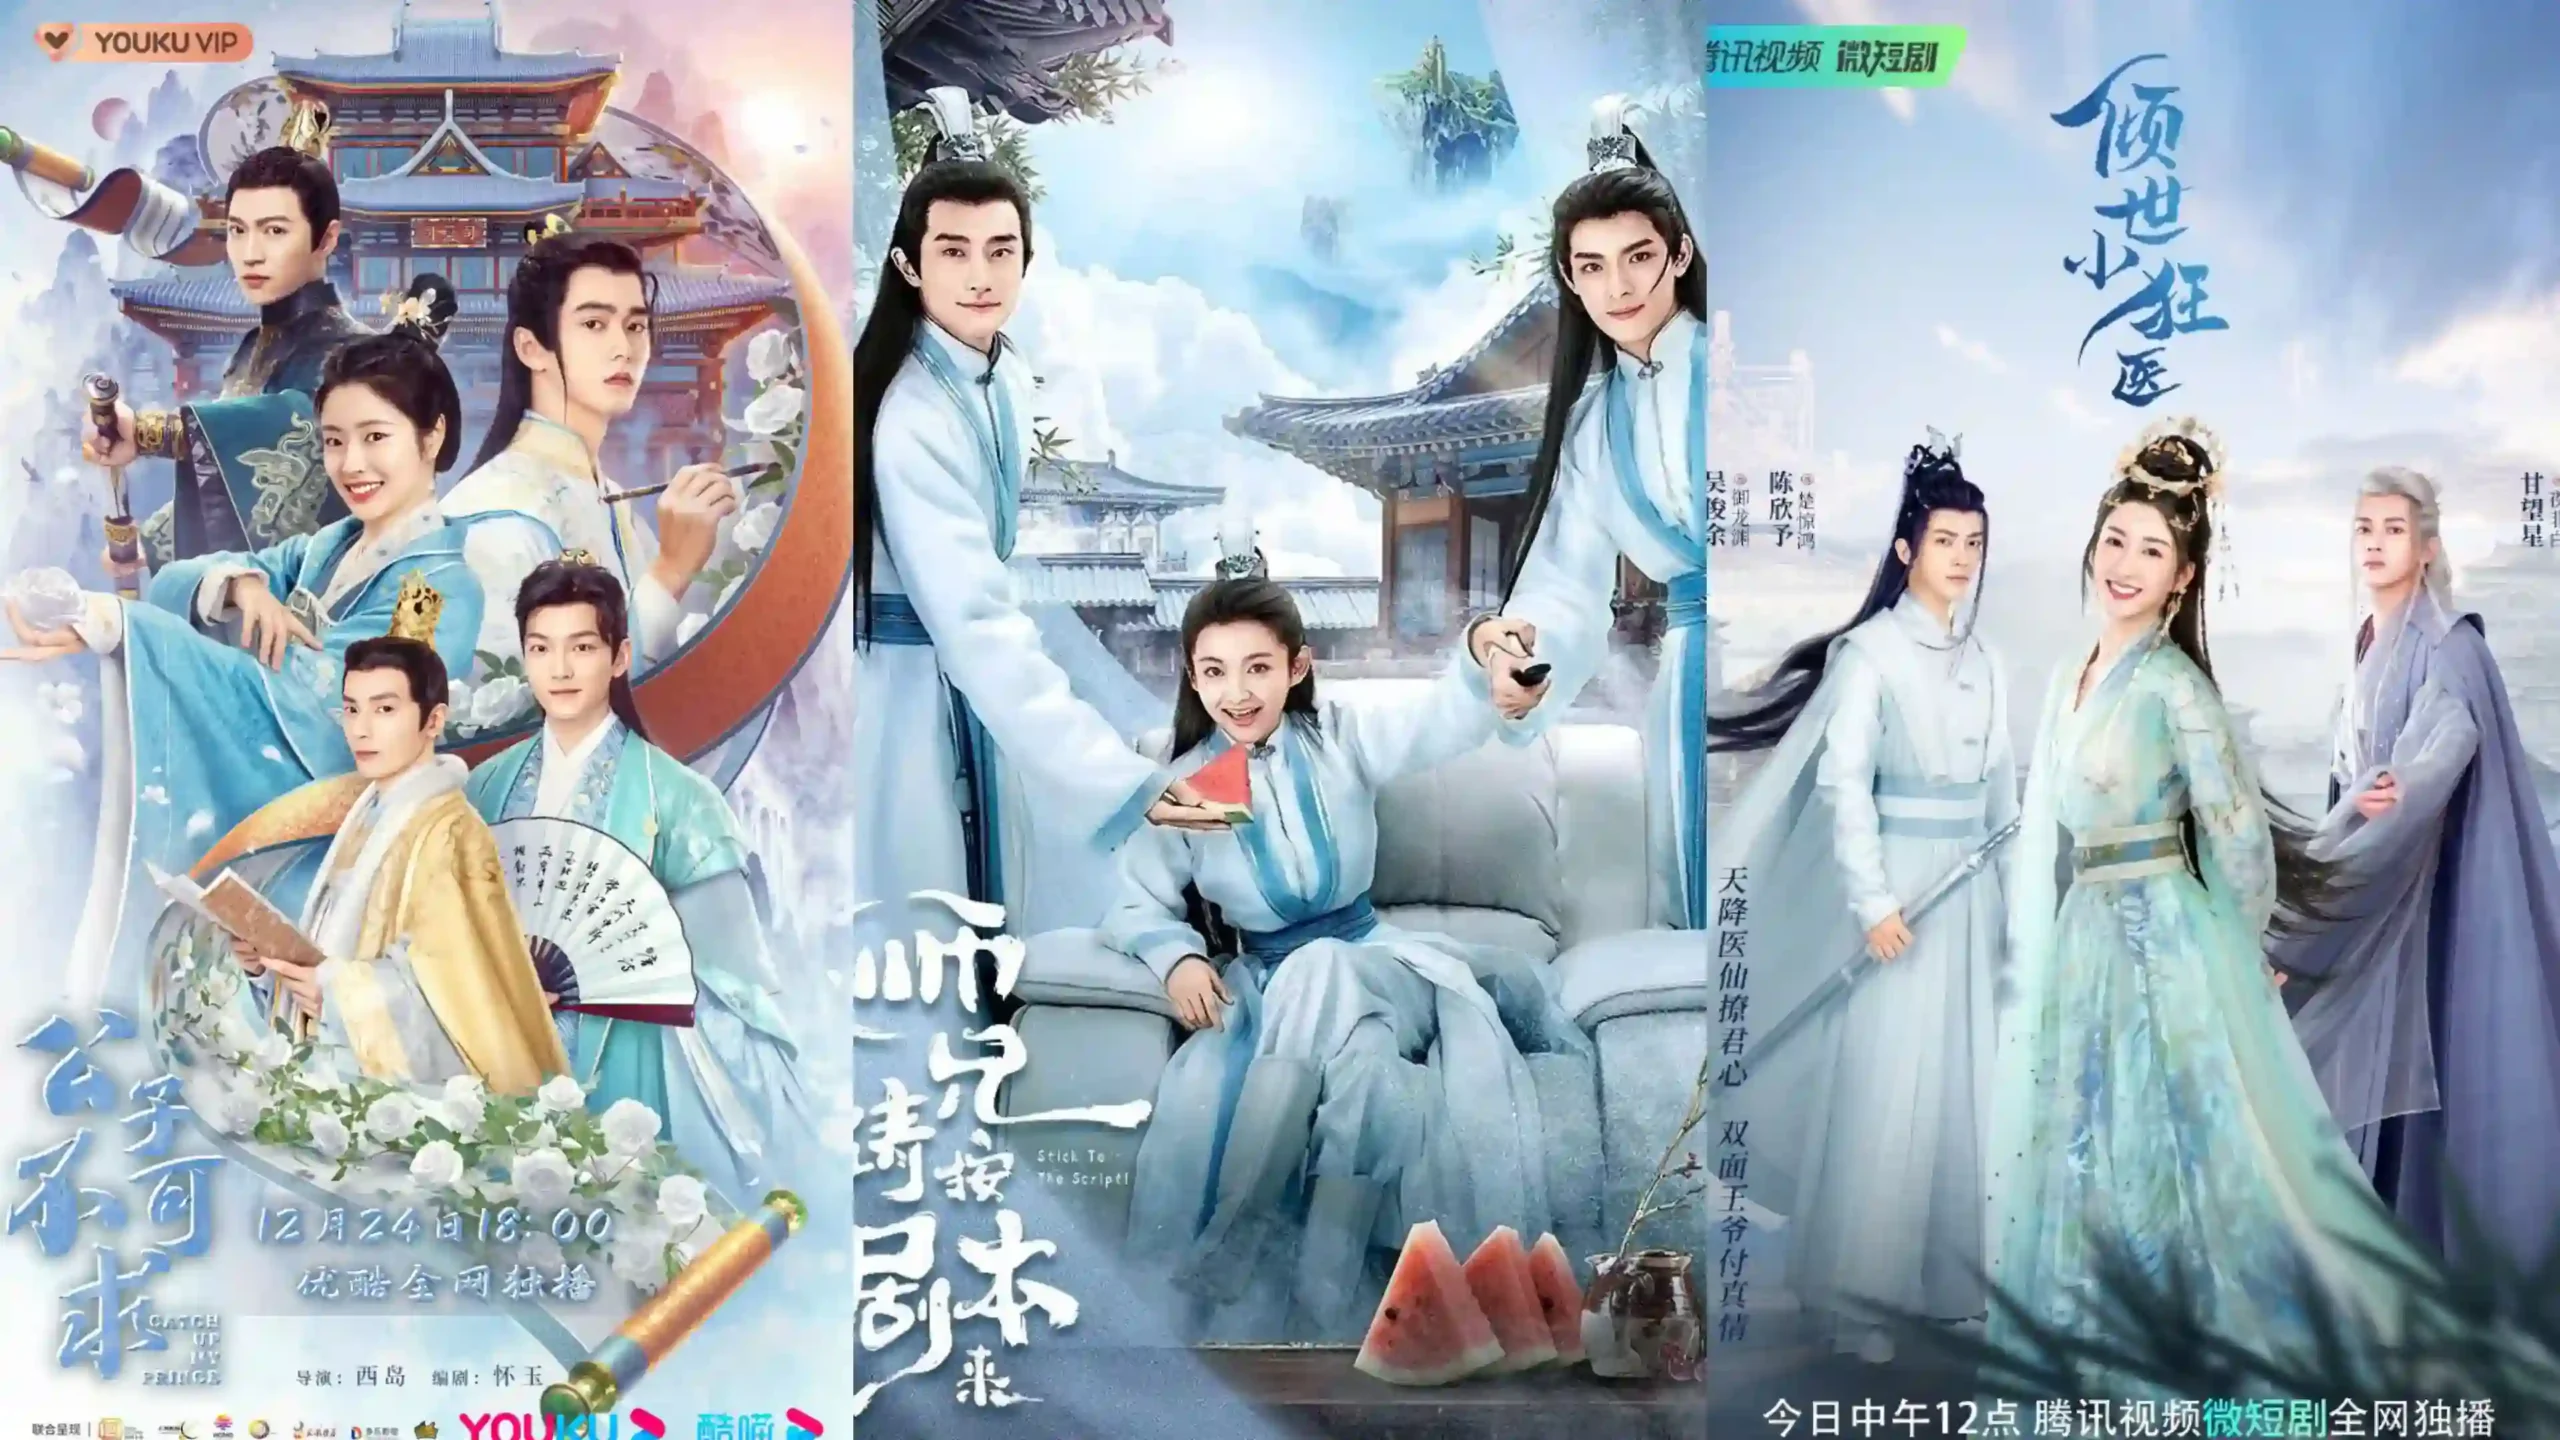 Interesting Chinese dramas with multiple worlds scaled